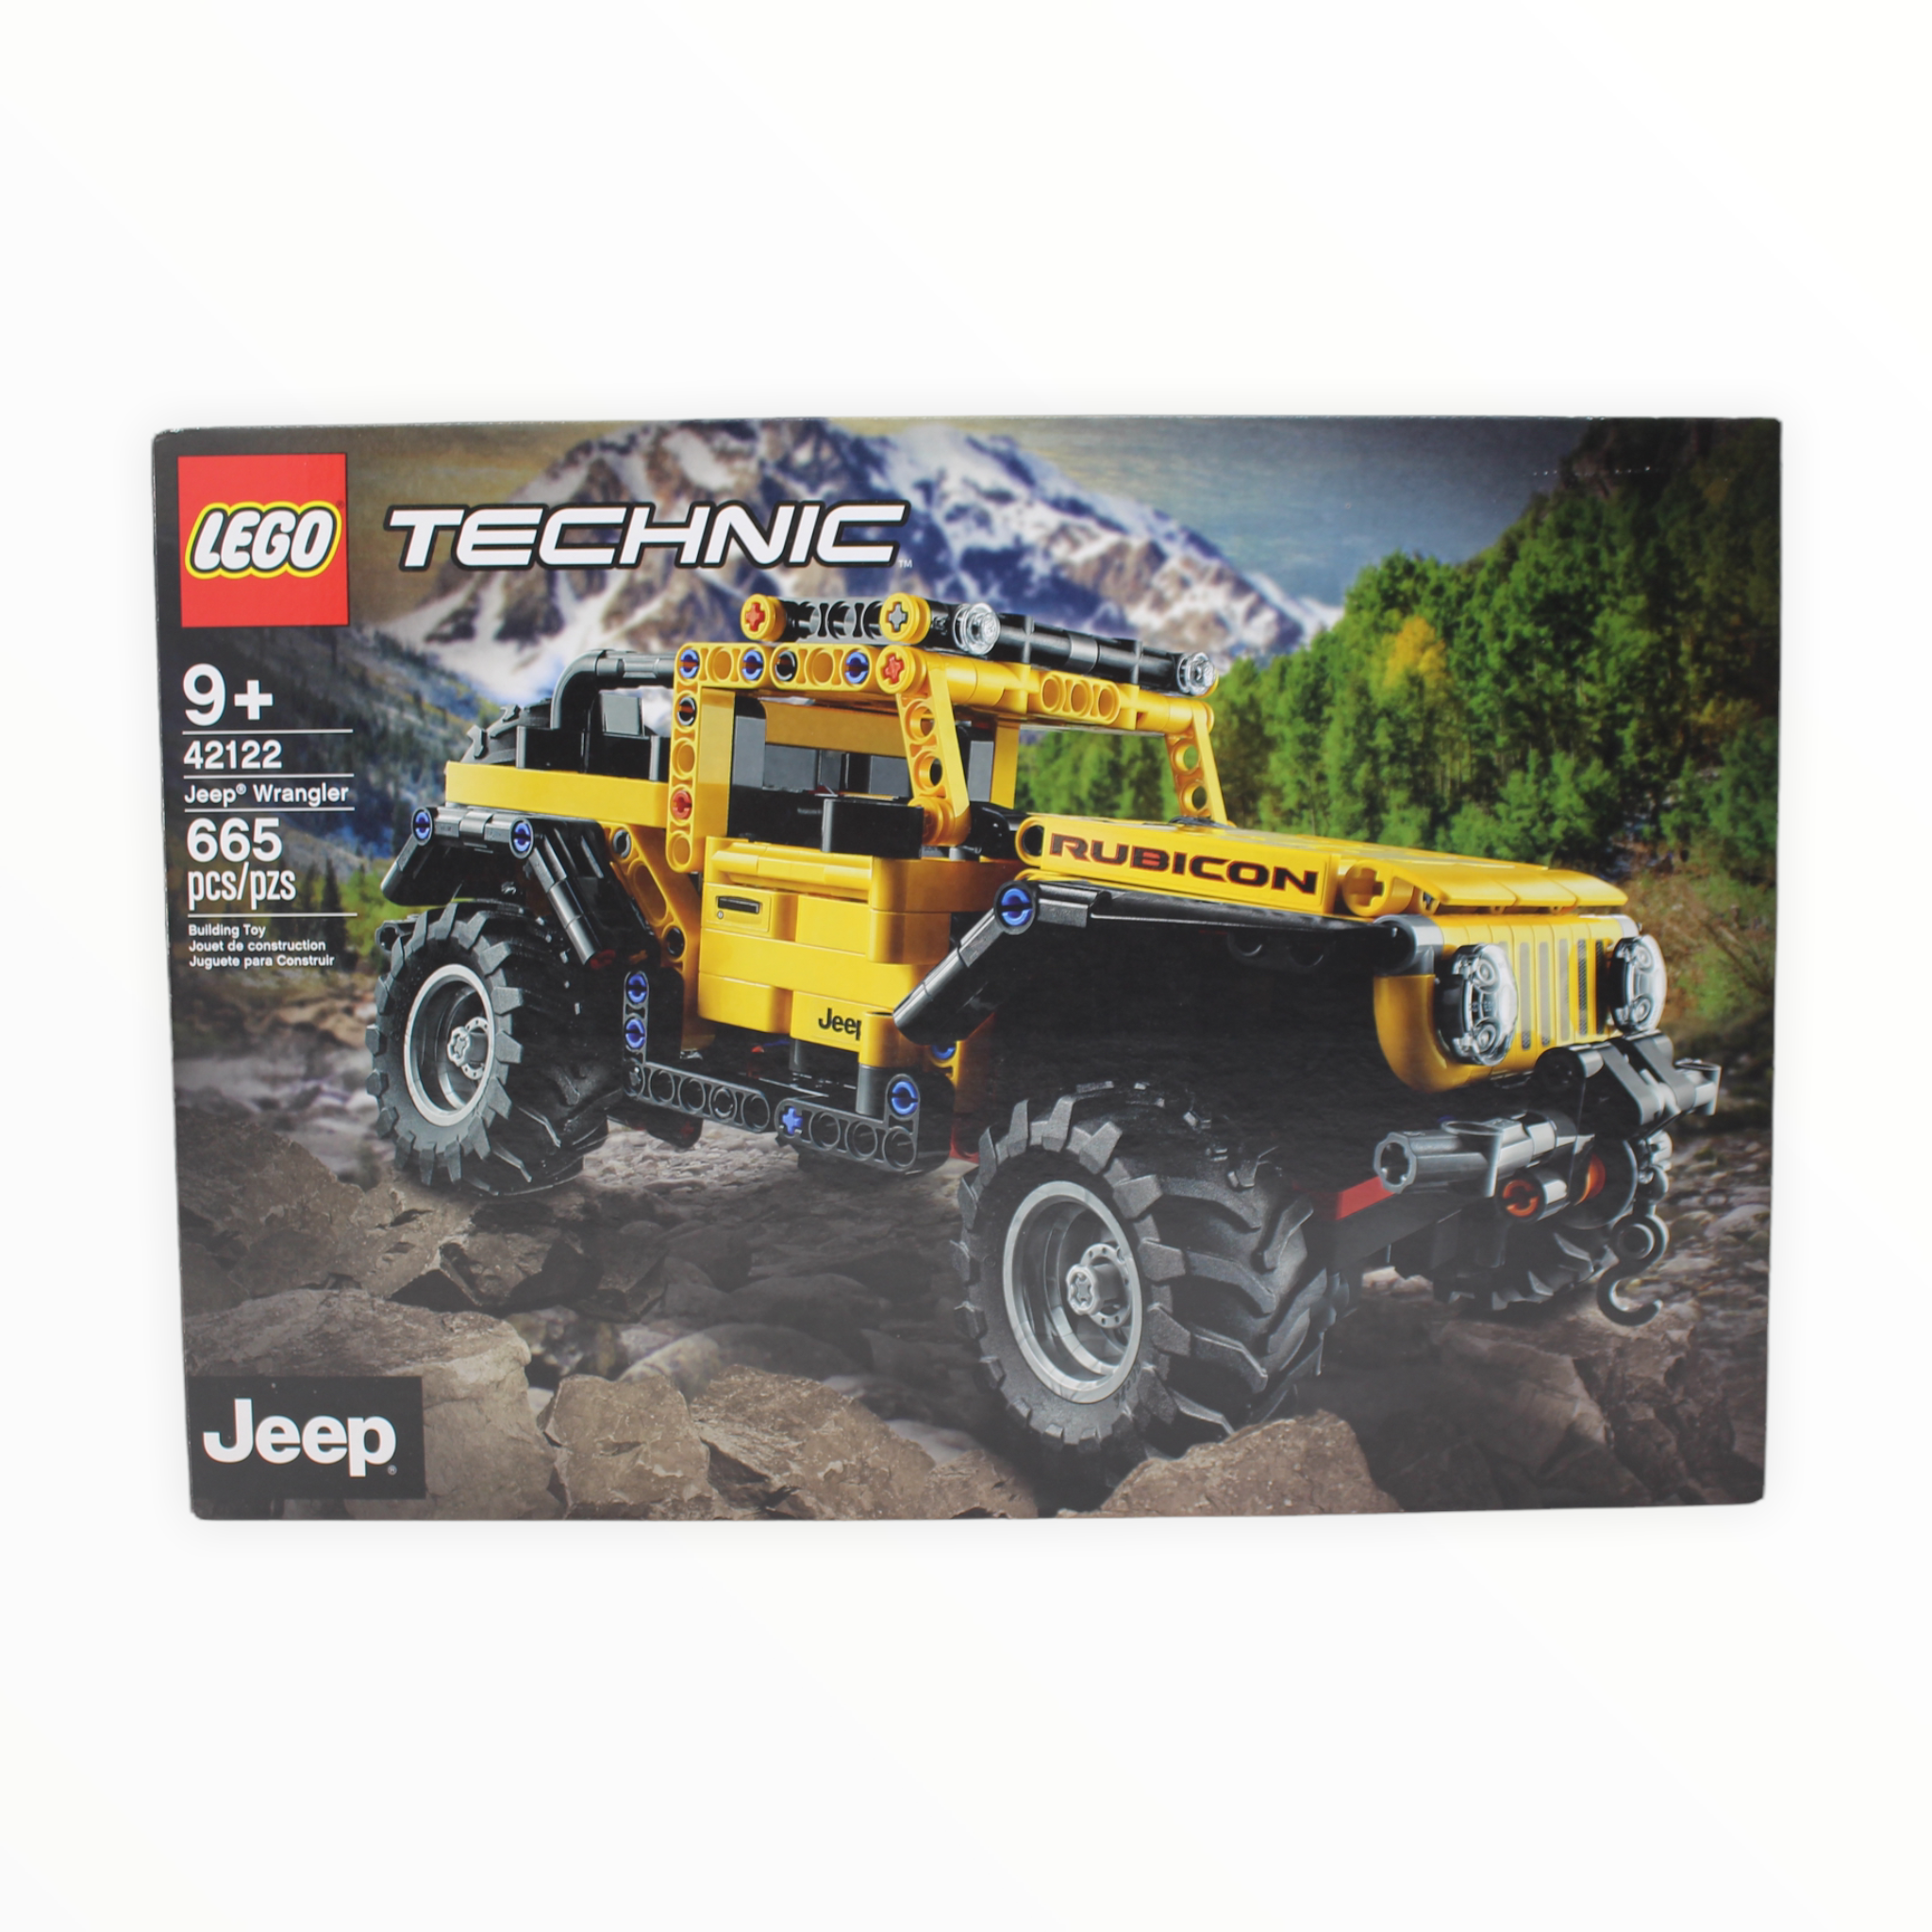 Certified Used Set 42122 Technic Jeep Wrangler